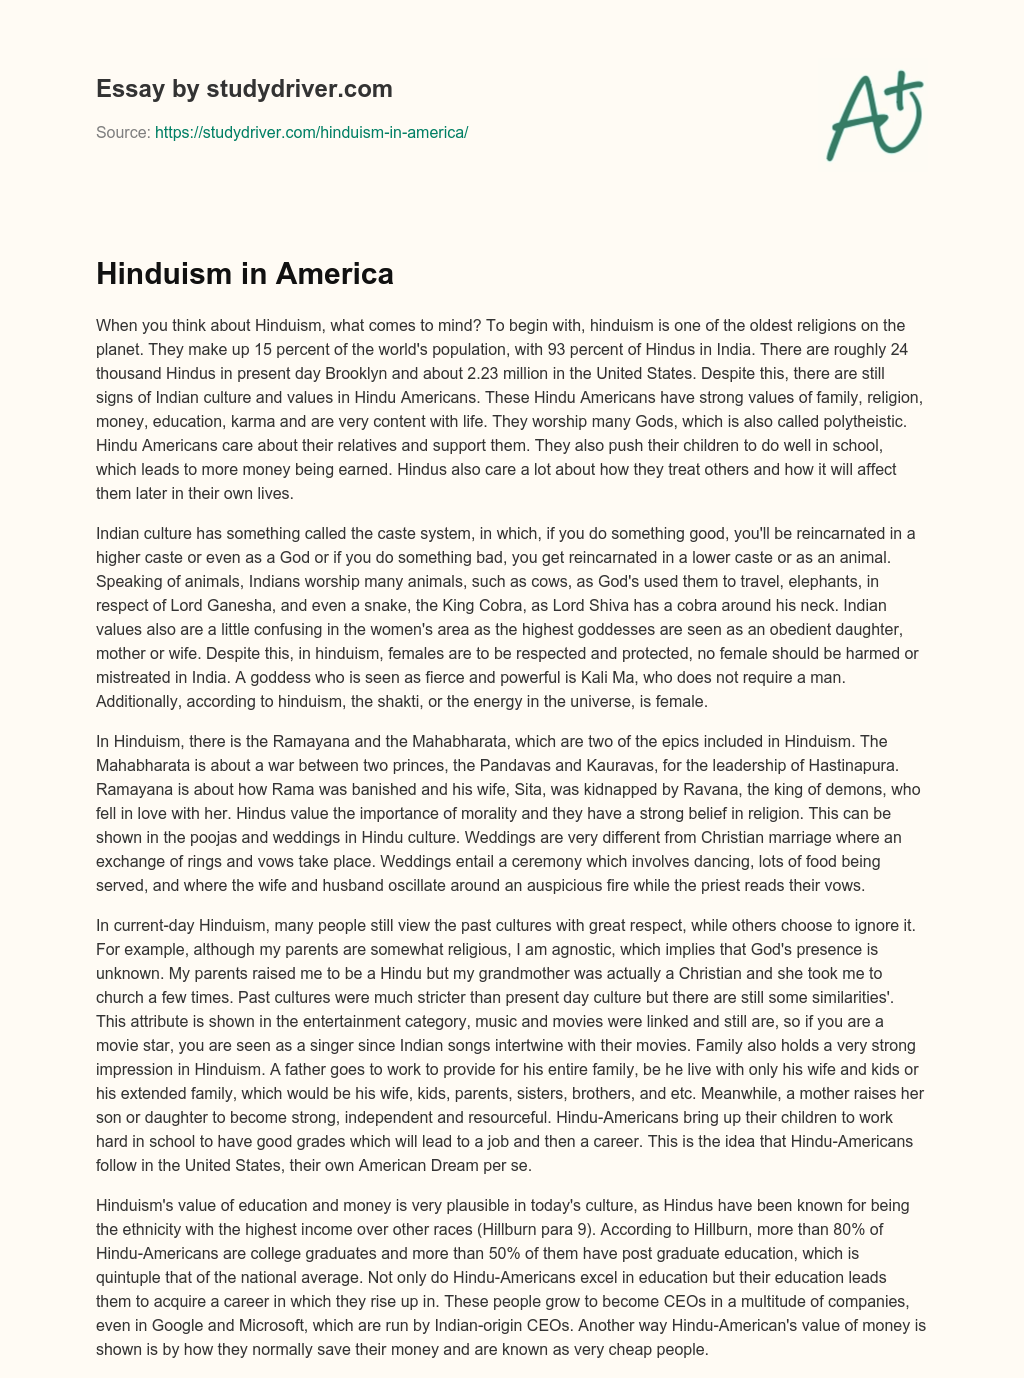 Hinduism in America essay